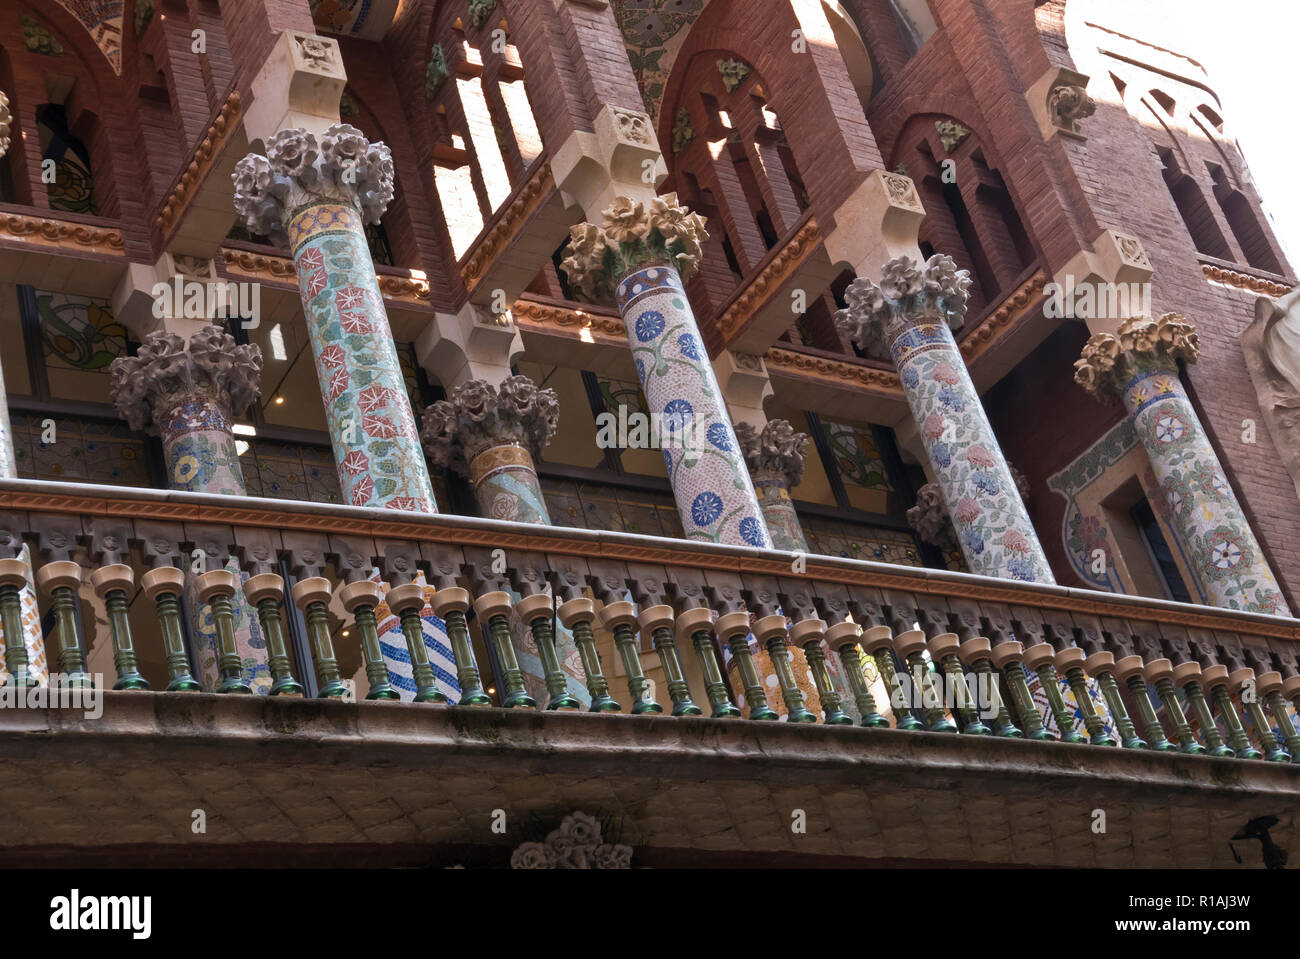 Colourful ornate columns on the exterior balcony of the Palau De La Musica, Barcelona, Spain Stock Photo